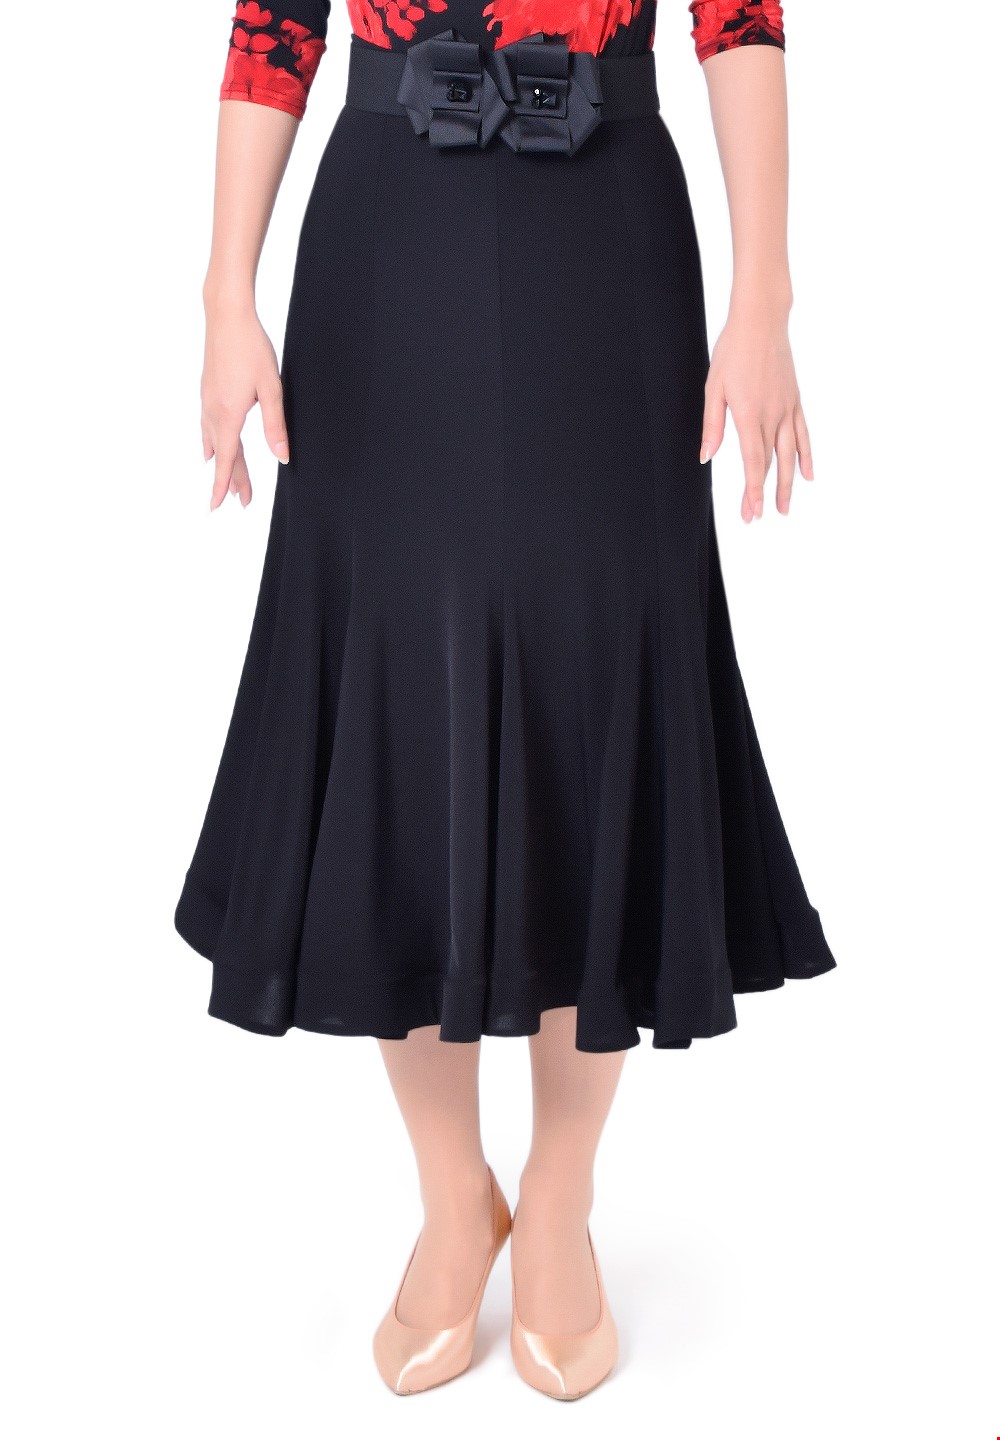 https://www.danceshopper.com/images/dancewear/womanswear/skirt/Taka-Essential-Flared-Practice-Skirt-KR1808RA-SK171-All_black-b.jpg?width=1500&height=2160&f.sharpen=10&a.Contrast=0&a.Saturation=0&a.Brightness=0&v=2024